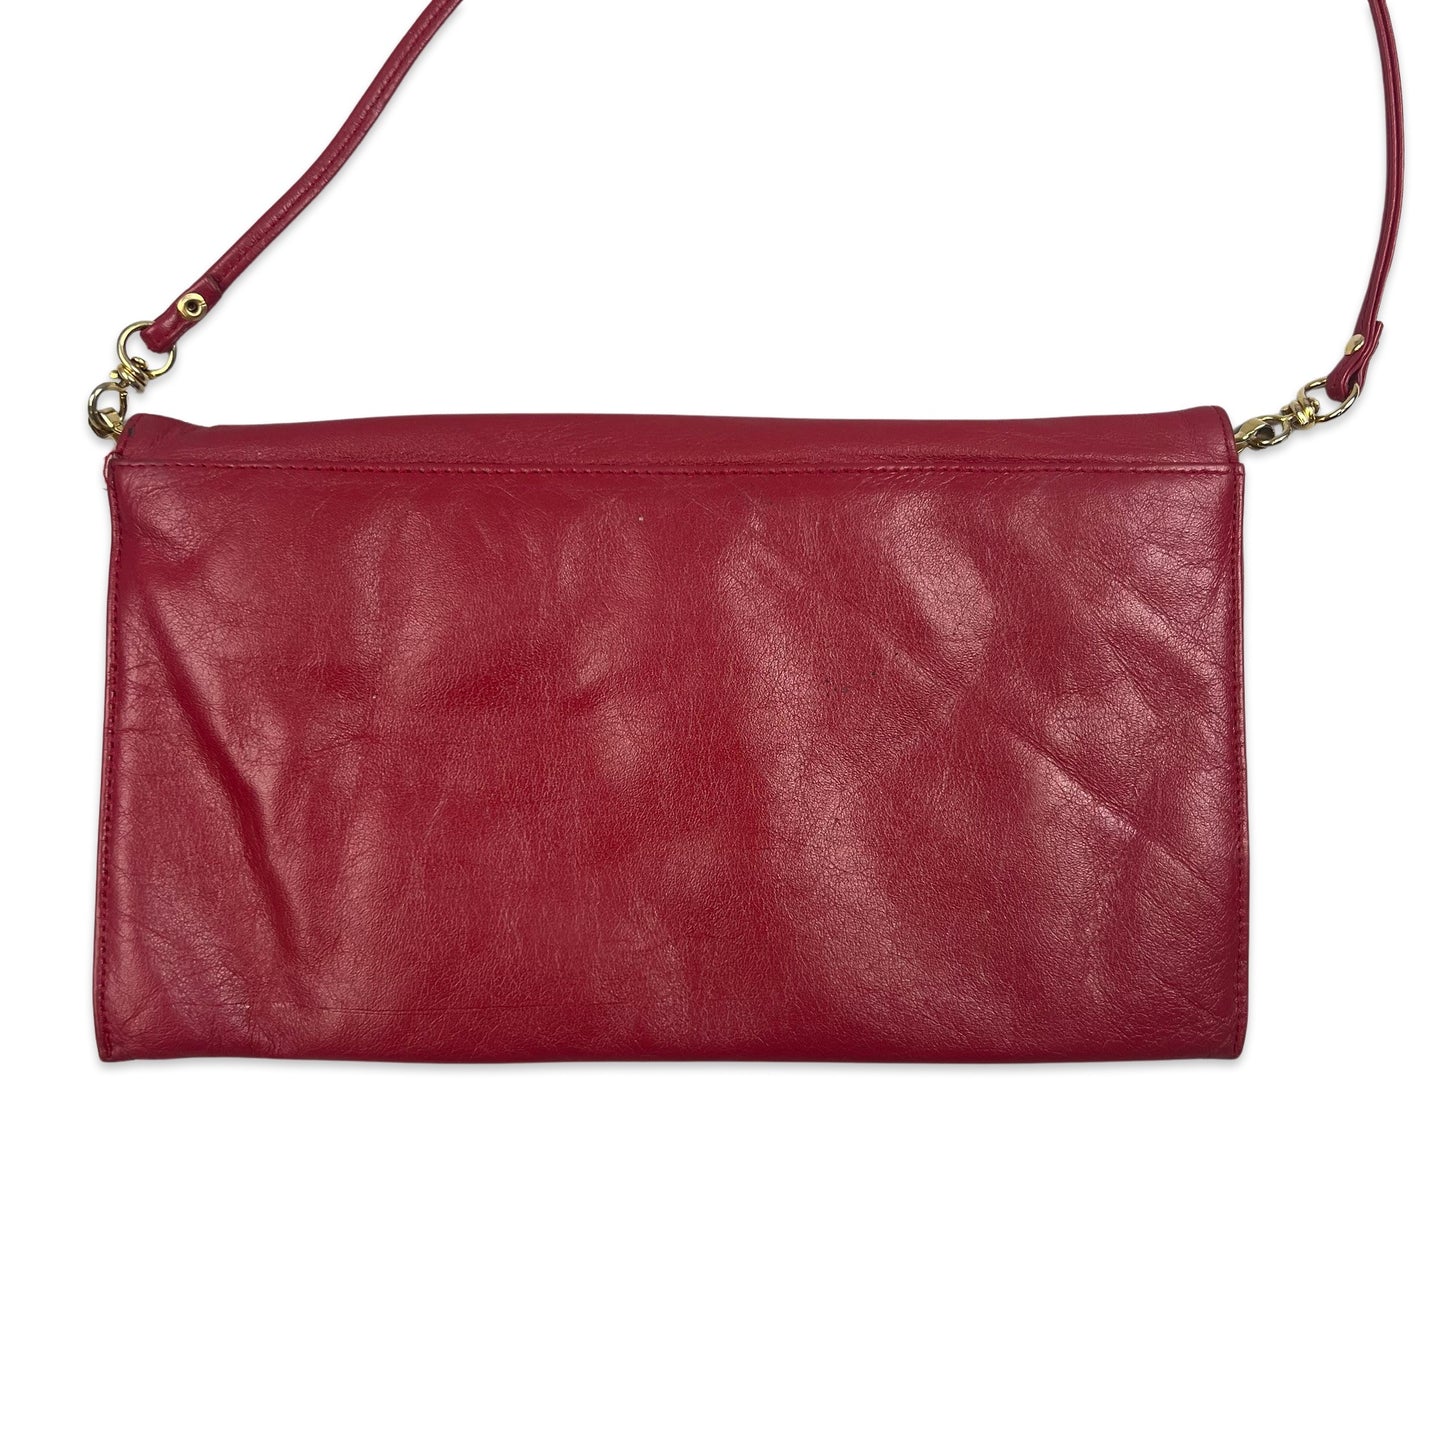 Vintage 80s Cherry Red Textured Leather Clutch Handbag